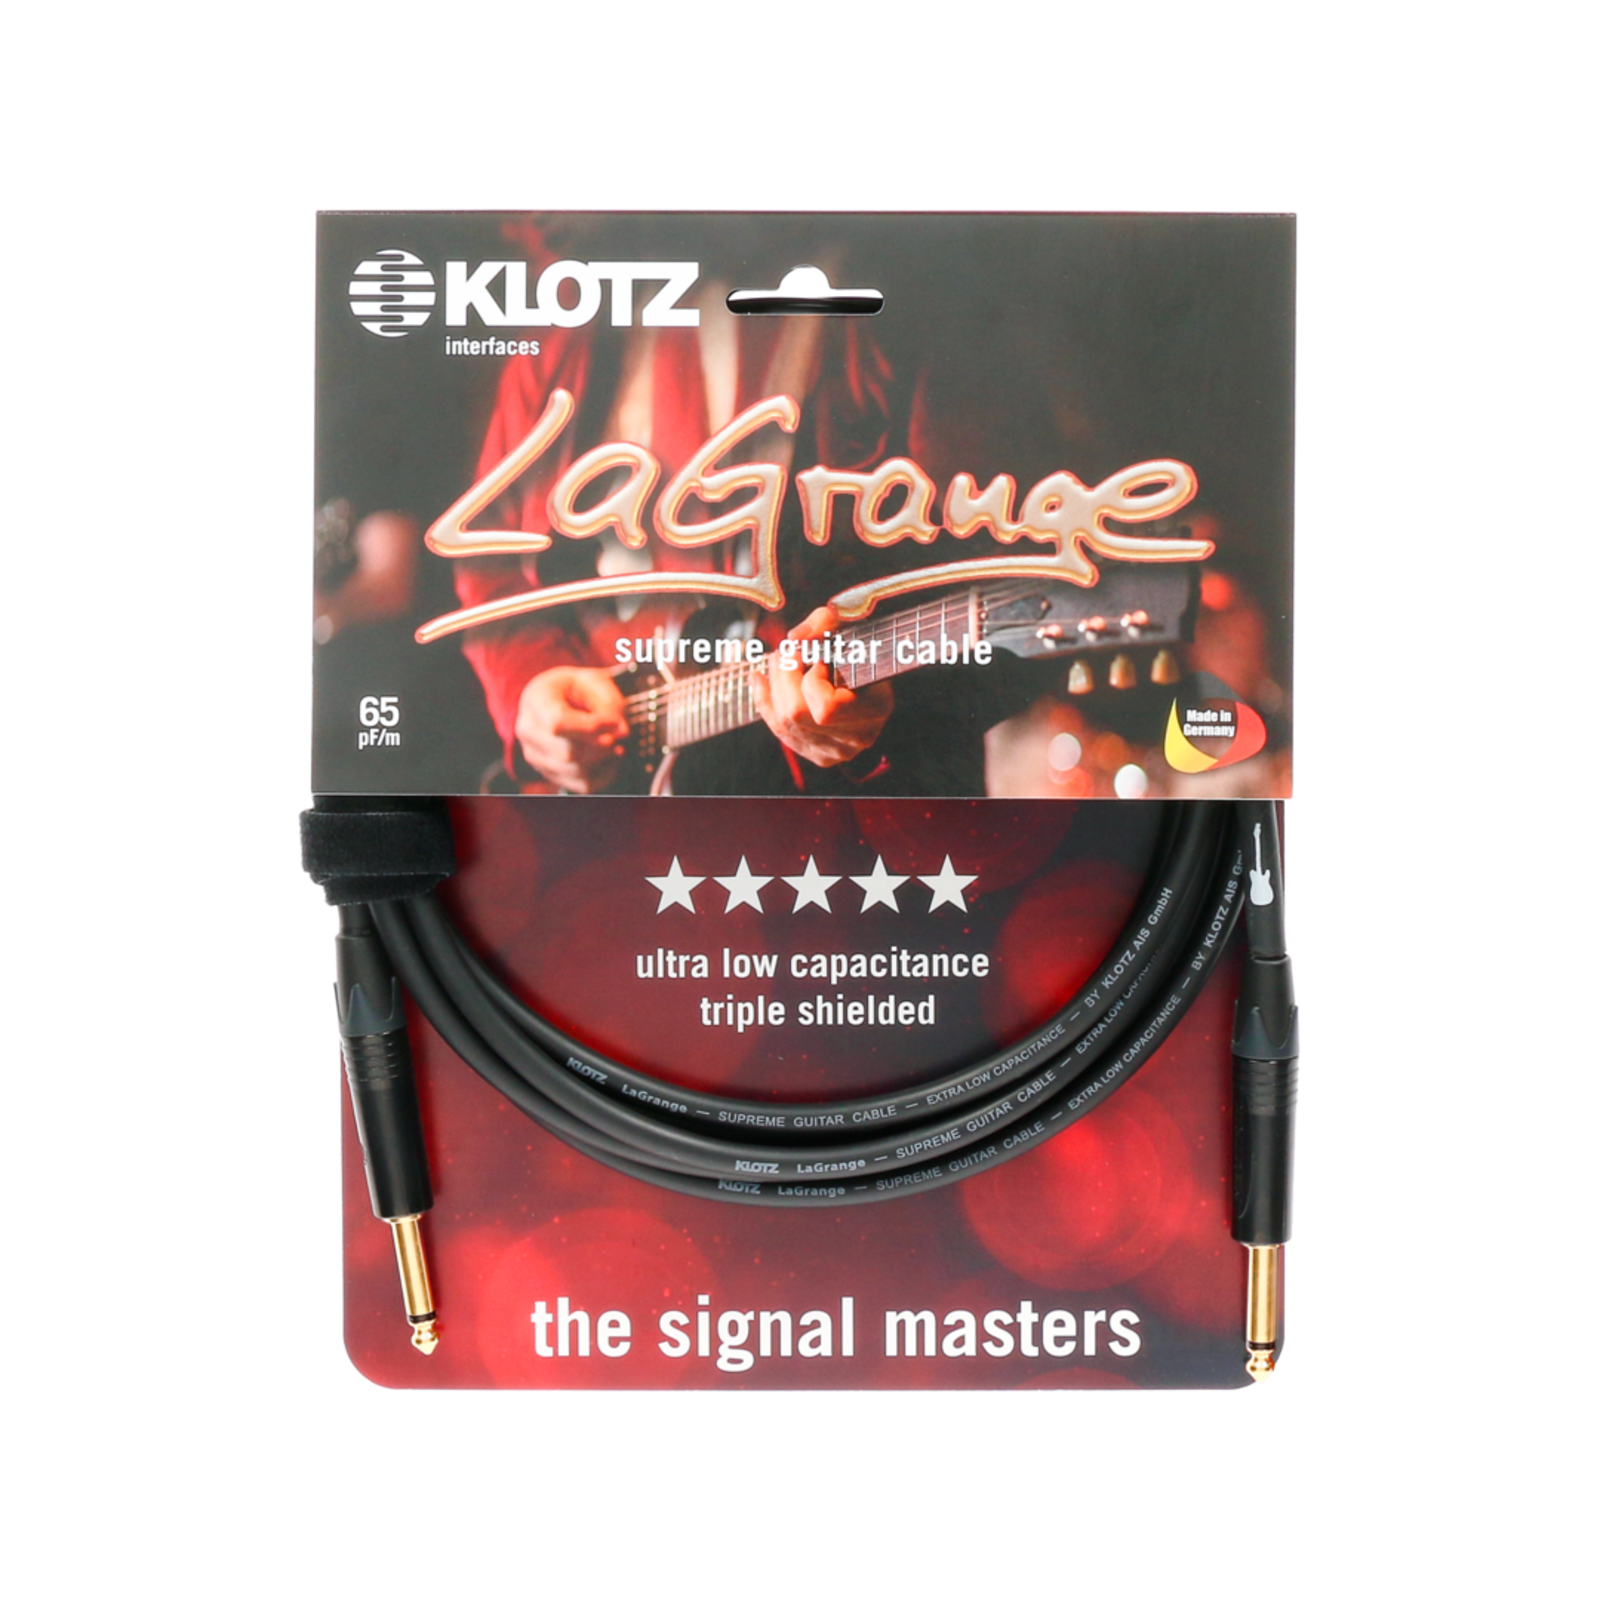 Klotz Klotz La Grange supreme guitar cable 4,5m